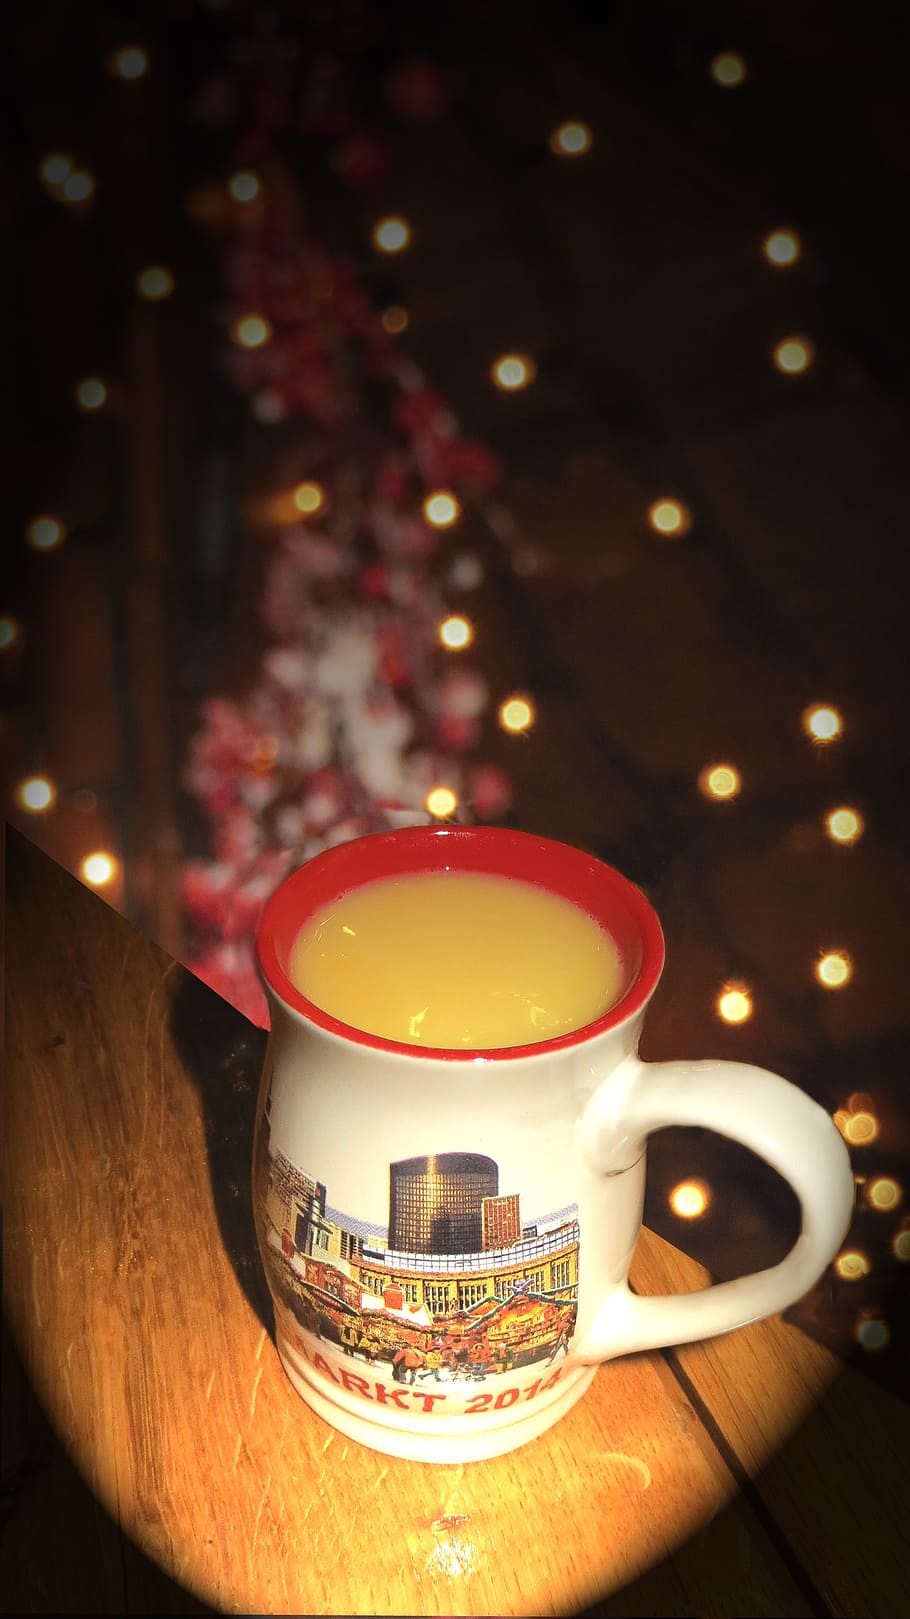 eggnog, christmas market, hot drink, mulled wine stand, cup, lights, benefit from, drink, alcohol, mug